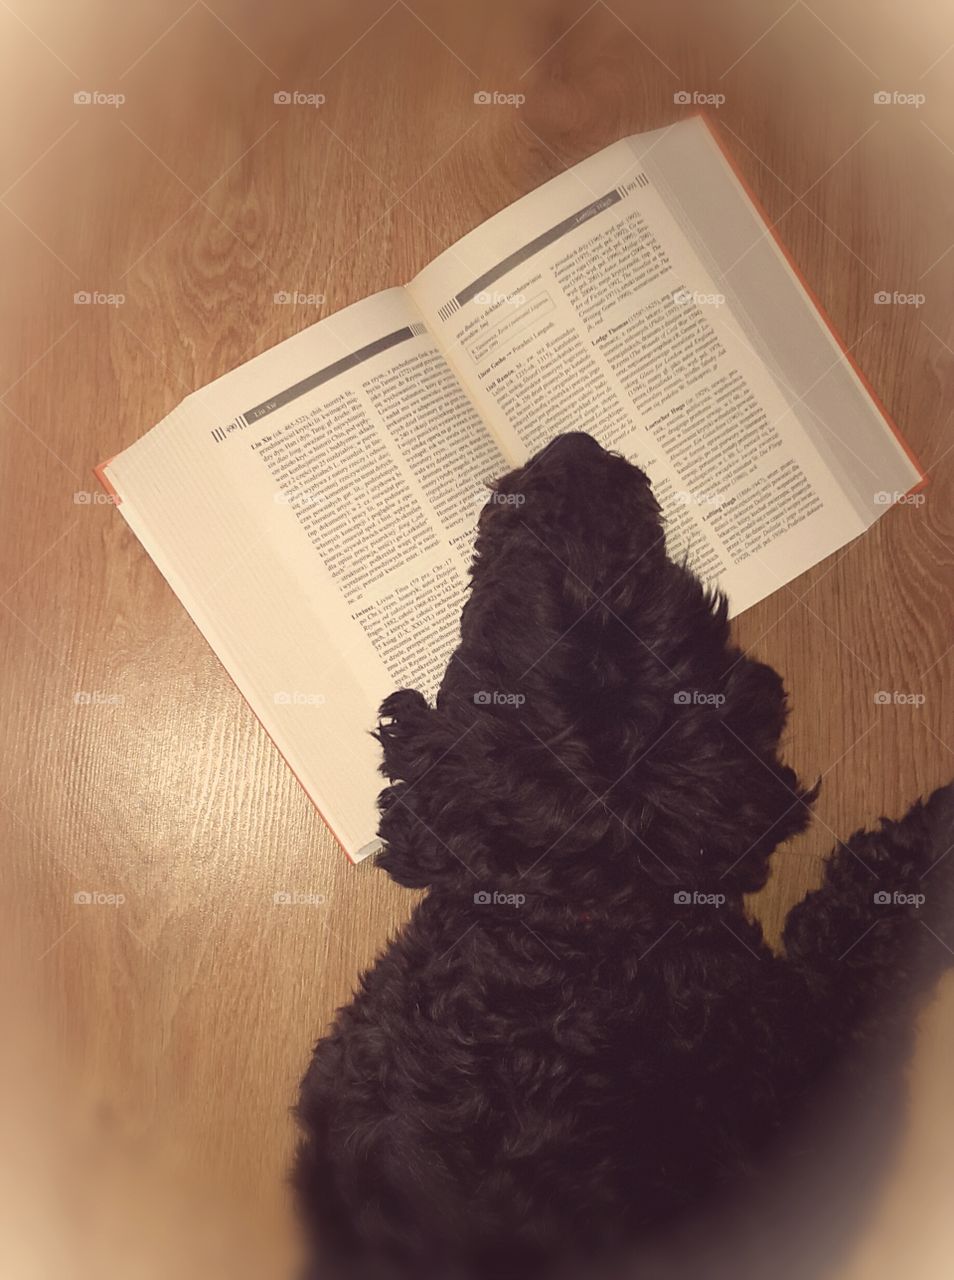 A reading dog